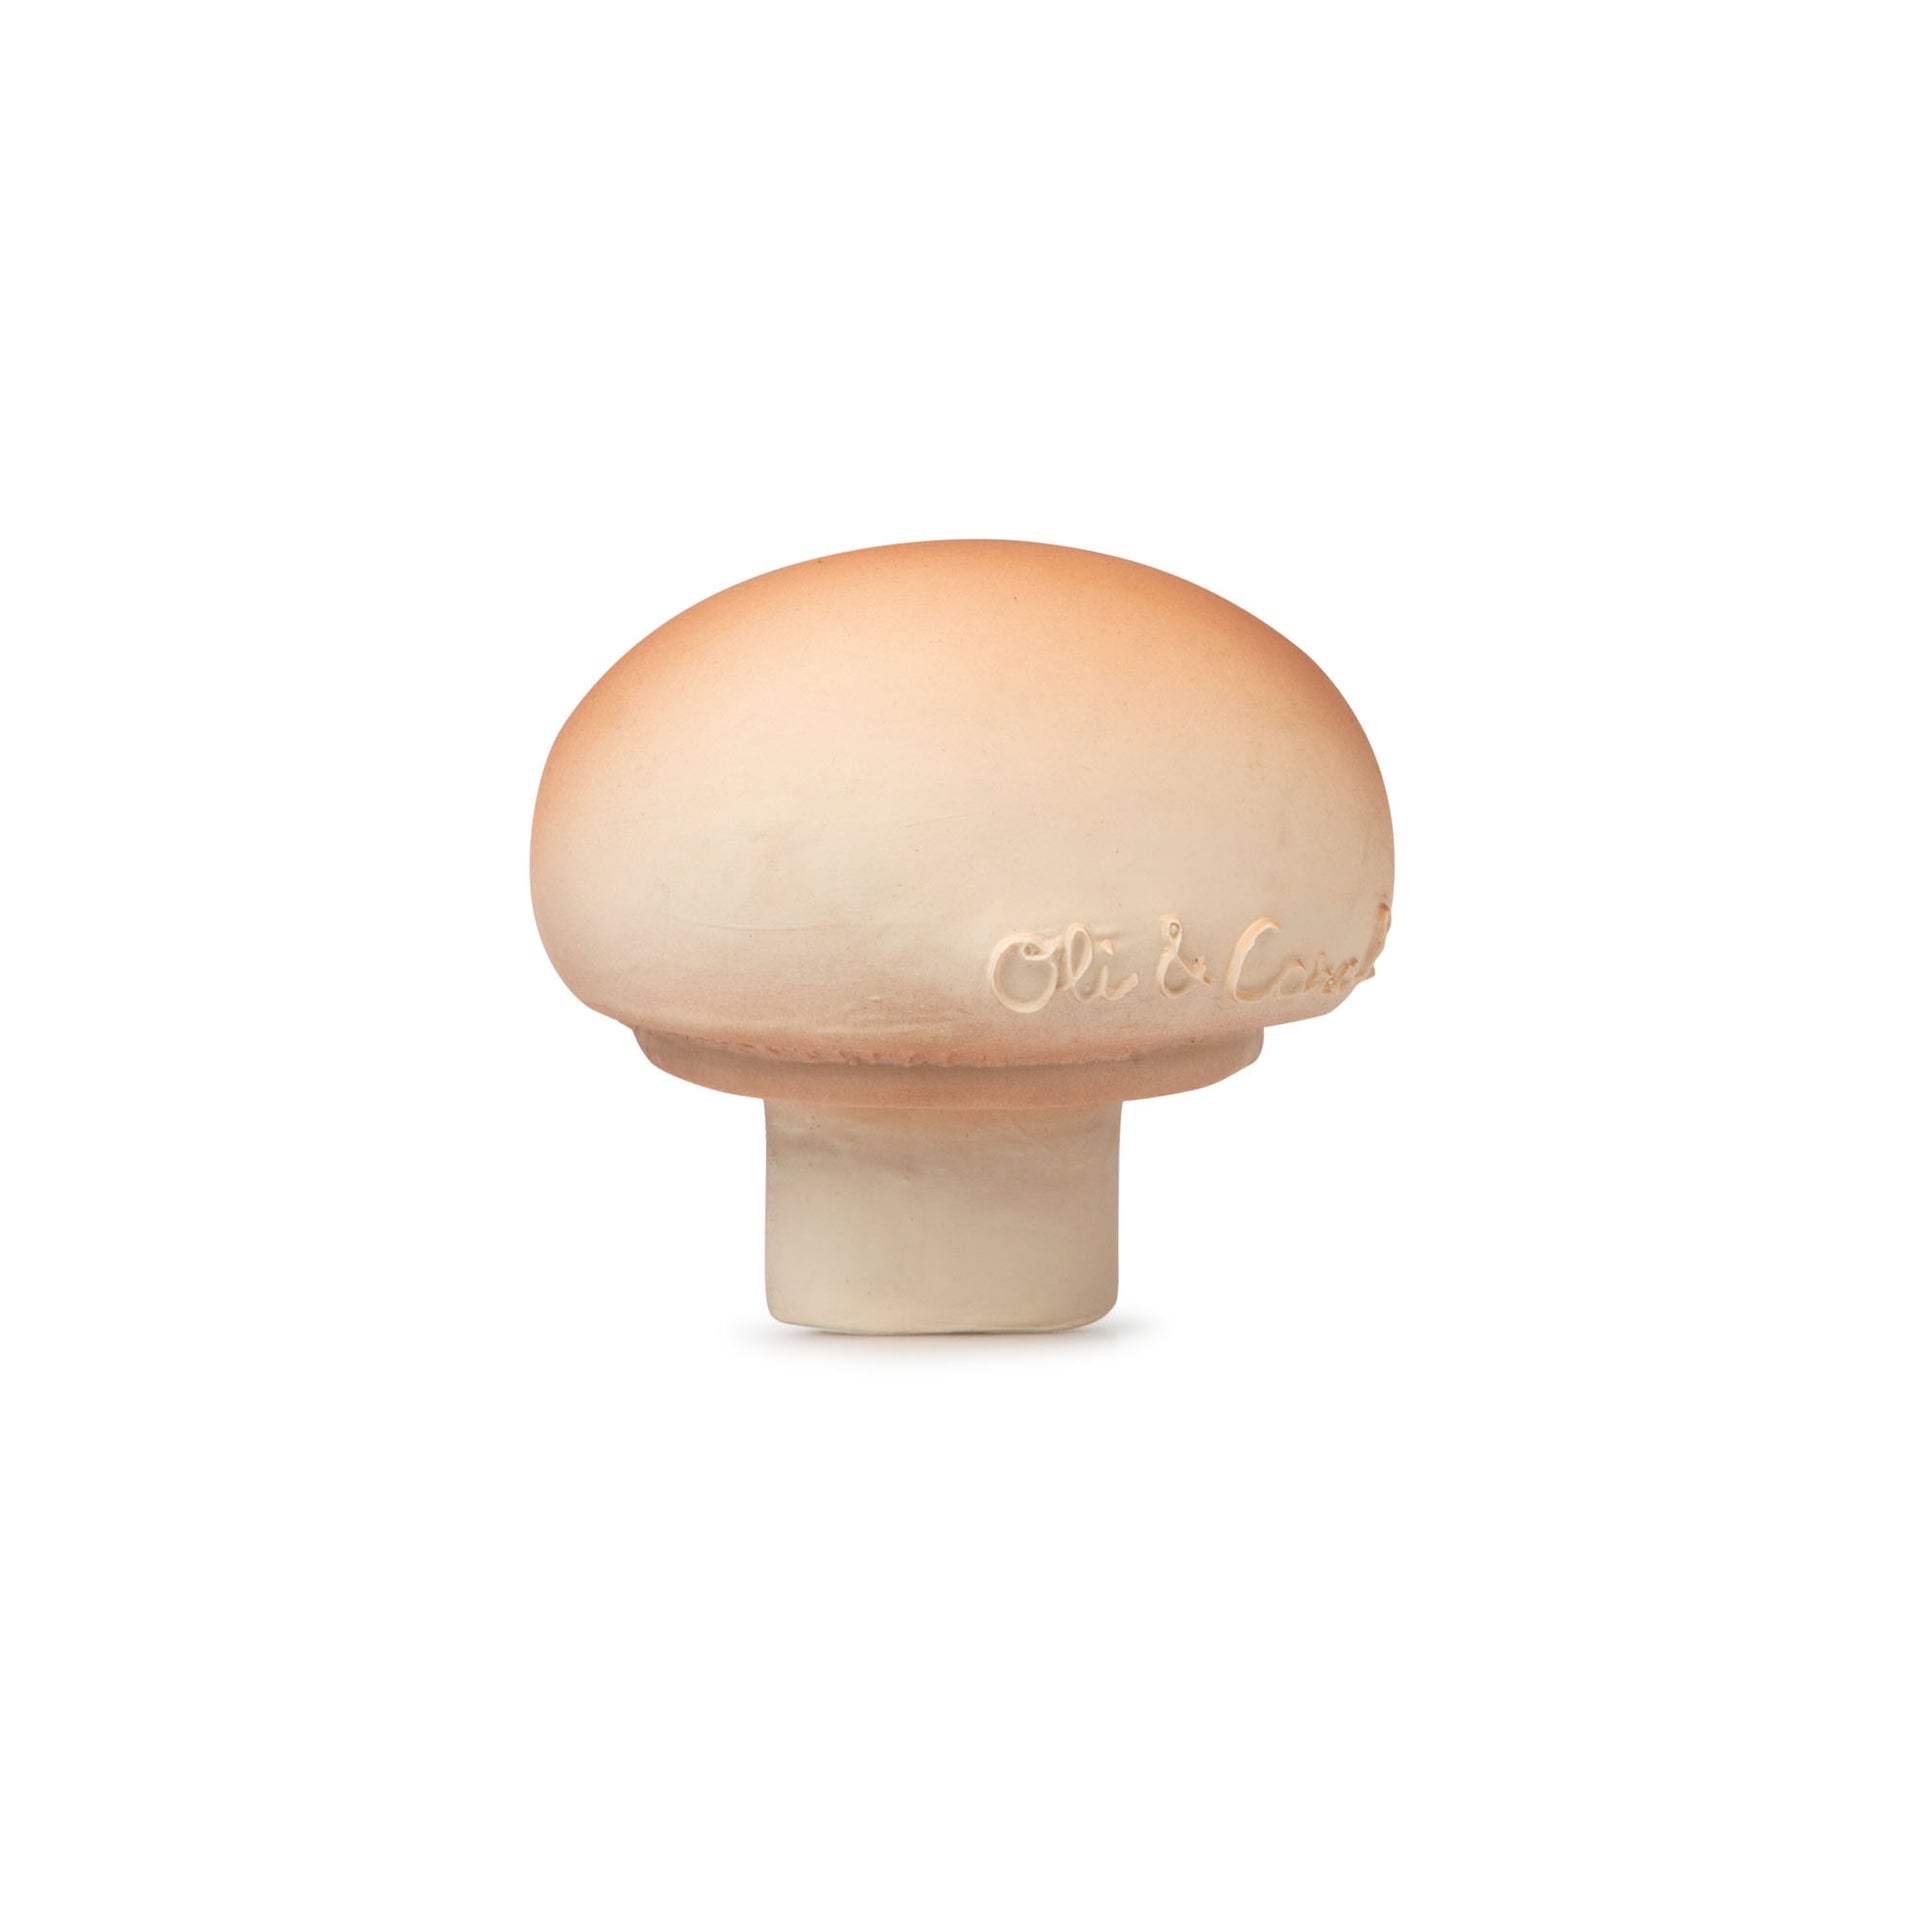 Oli & Carol Spot The Mushroom Natural Rubber Teether – The Mom Store